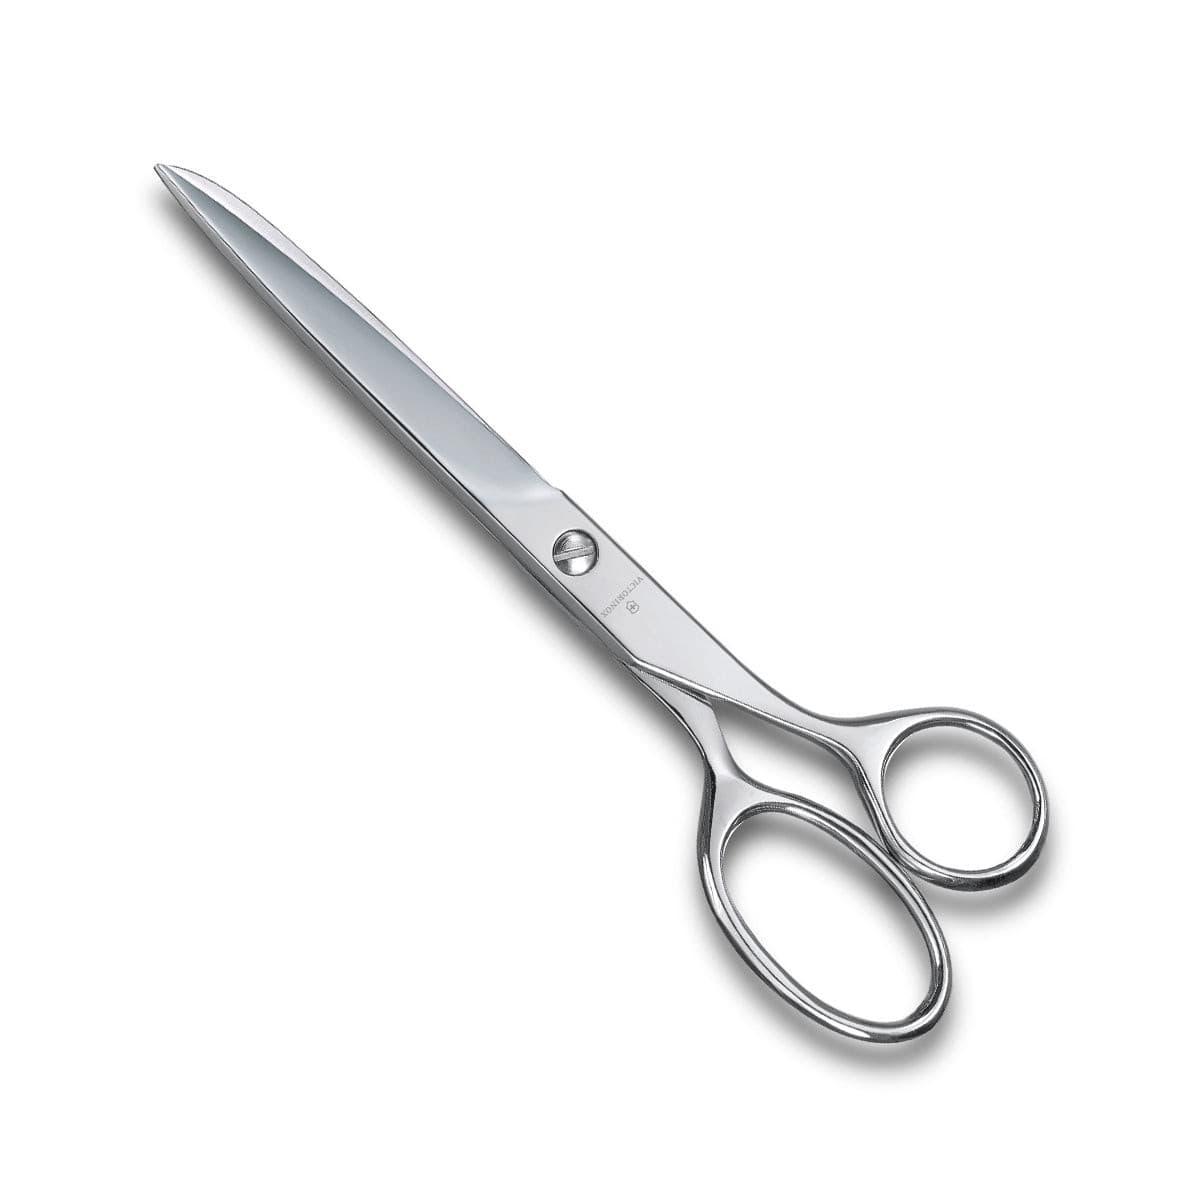 https://cdn.shopify.com/s/files/1/0230/6736/1316/products/victorinox-household-scissors-sweden-18cm-334650.jpg?v=1693992922&width=1200